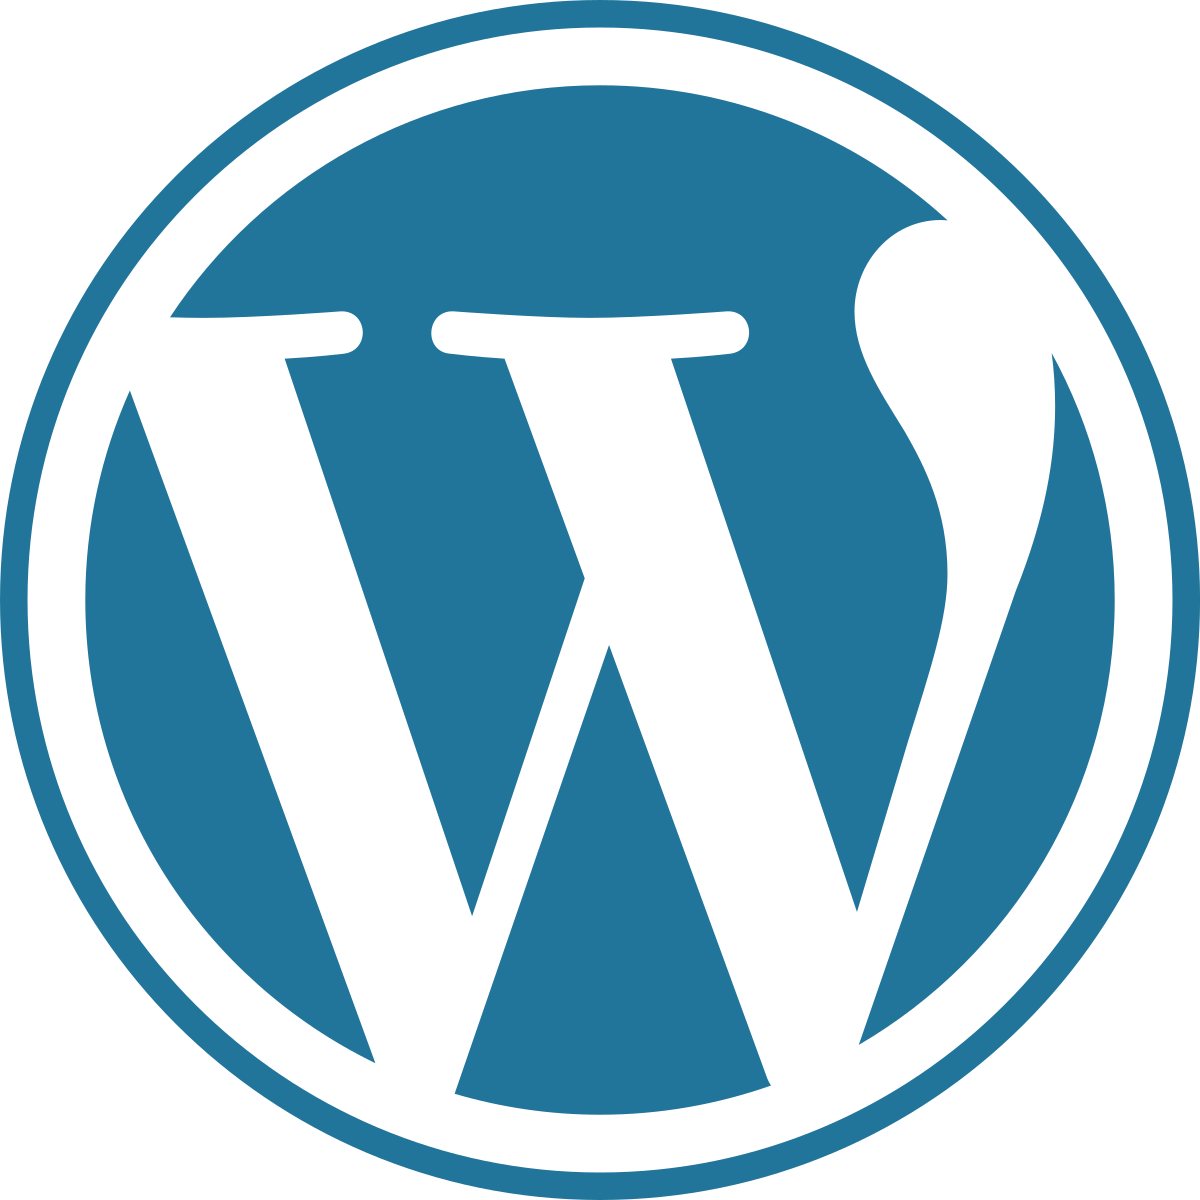 WordPress_logo